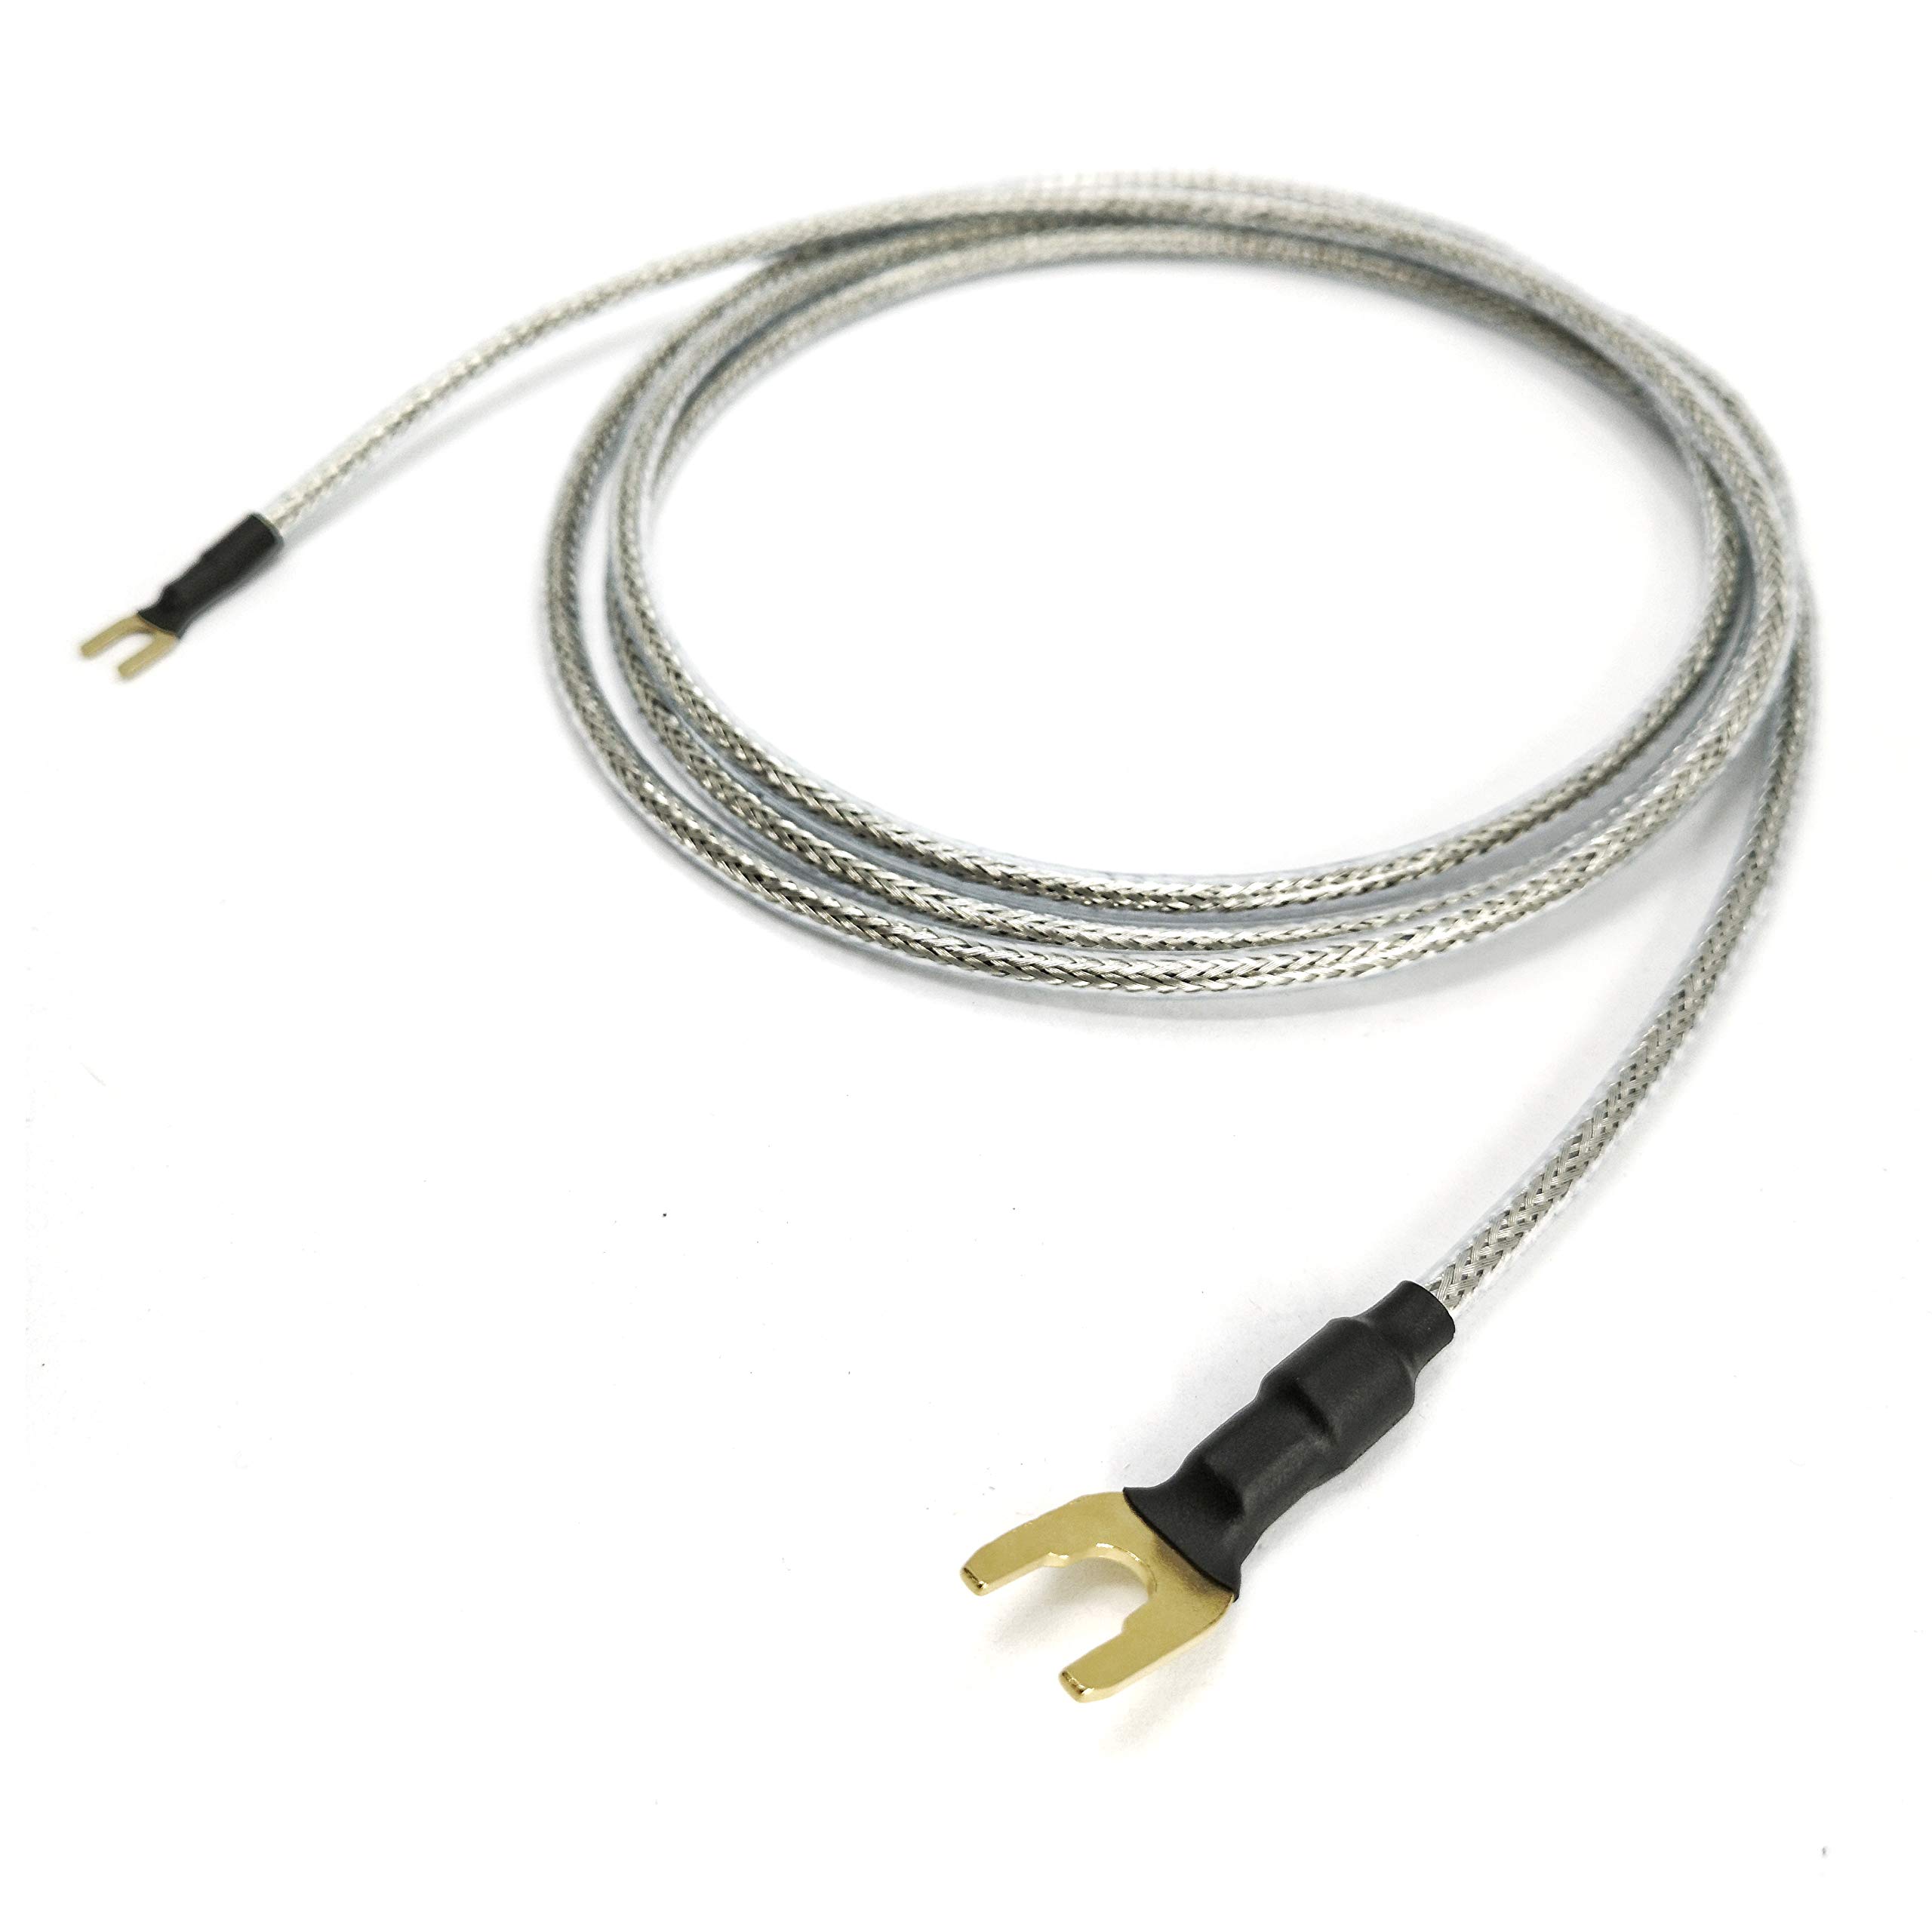 Selected Cable 1m Erdungsleitung 1x 1,0mm² für Plattenspieler und Hi-fi Verstärker mit Masseanschluß vergoldete Gabelschuh in Zwei Größen transparent Silber Geflecht